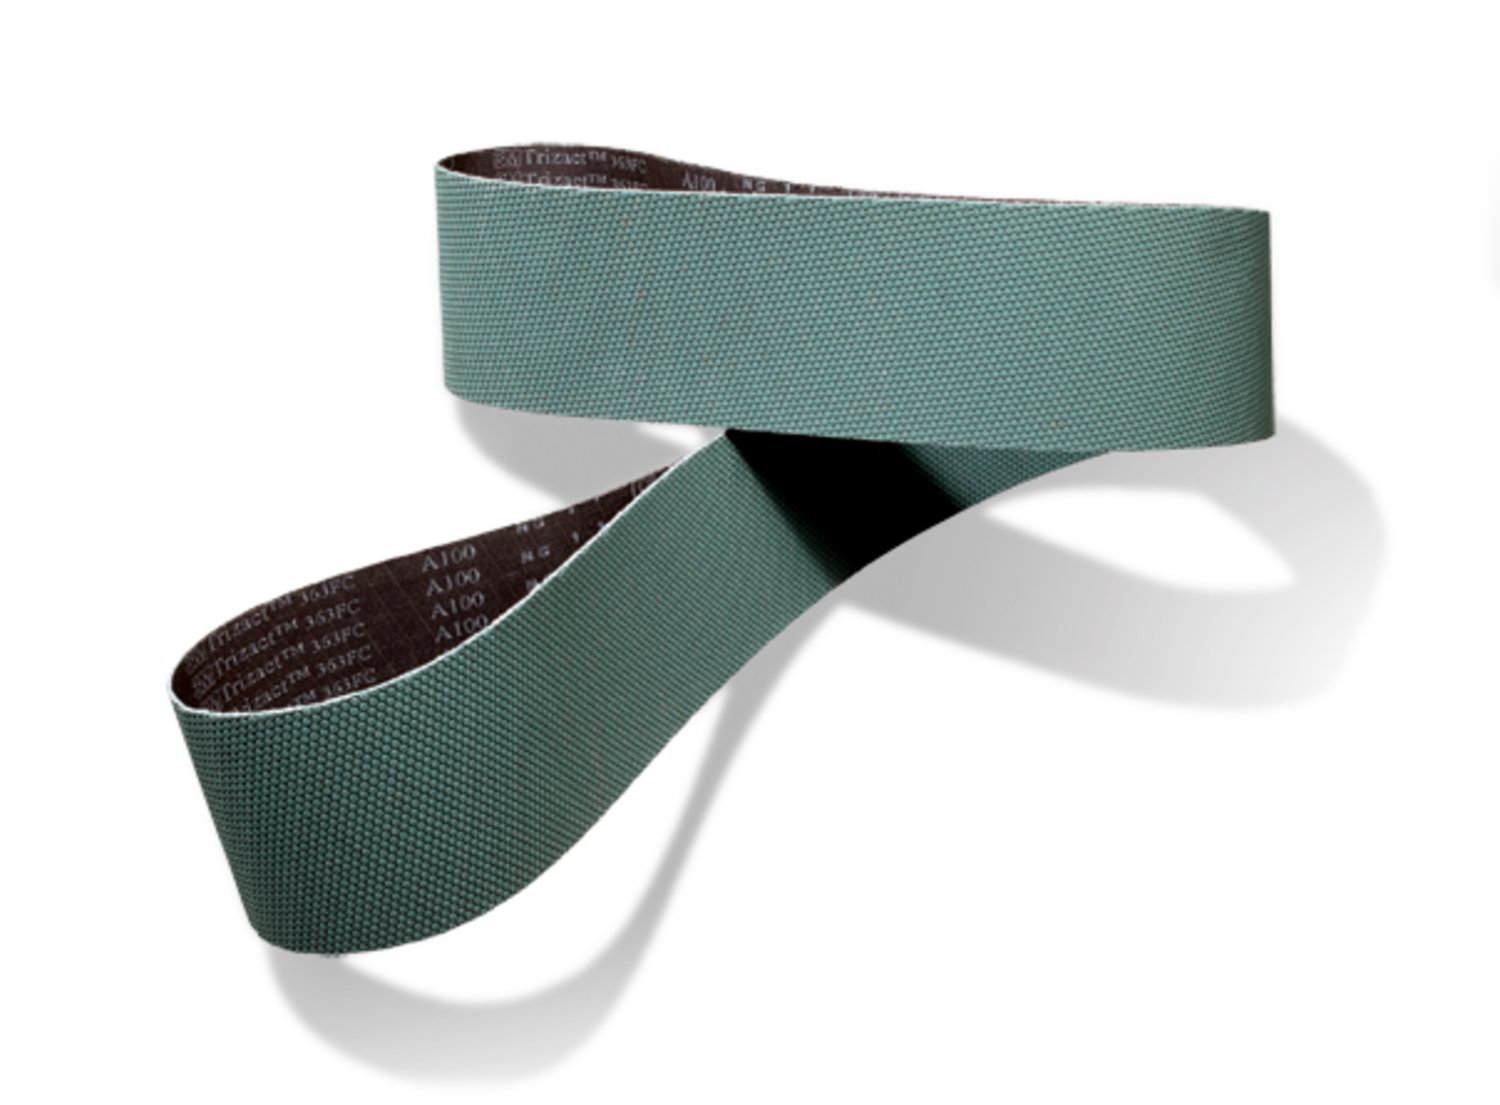 7010517085 - 3M Trizact Cloth Belt 363FC, A160 YF-weight, 3 in x 132 in, Film-lok,
Full-flex